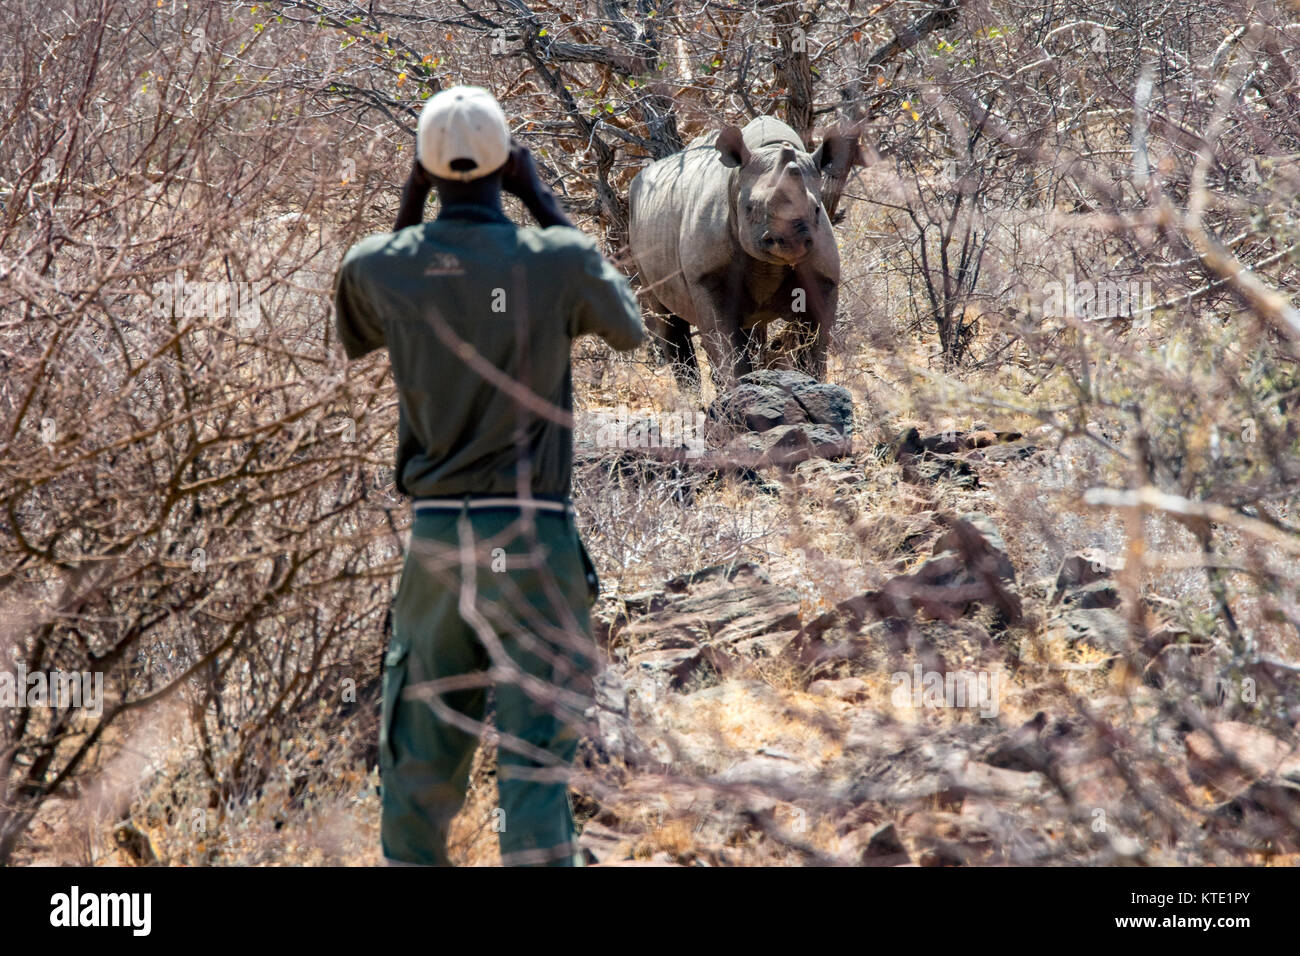 Rhino Ranger supervisión de rinocerontes negros (Diceros bicornis) en Huab bajo lonas, Damaraland, Namibia, África Foto de stock